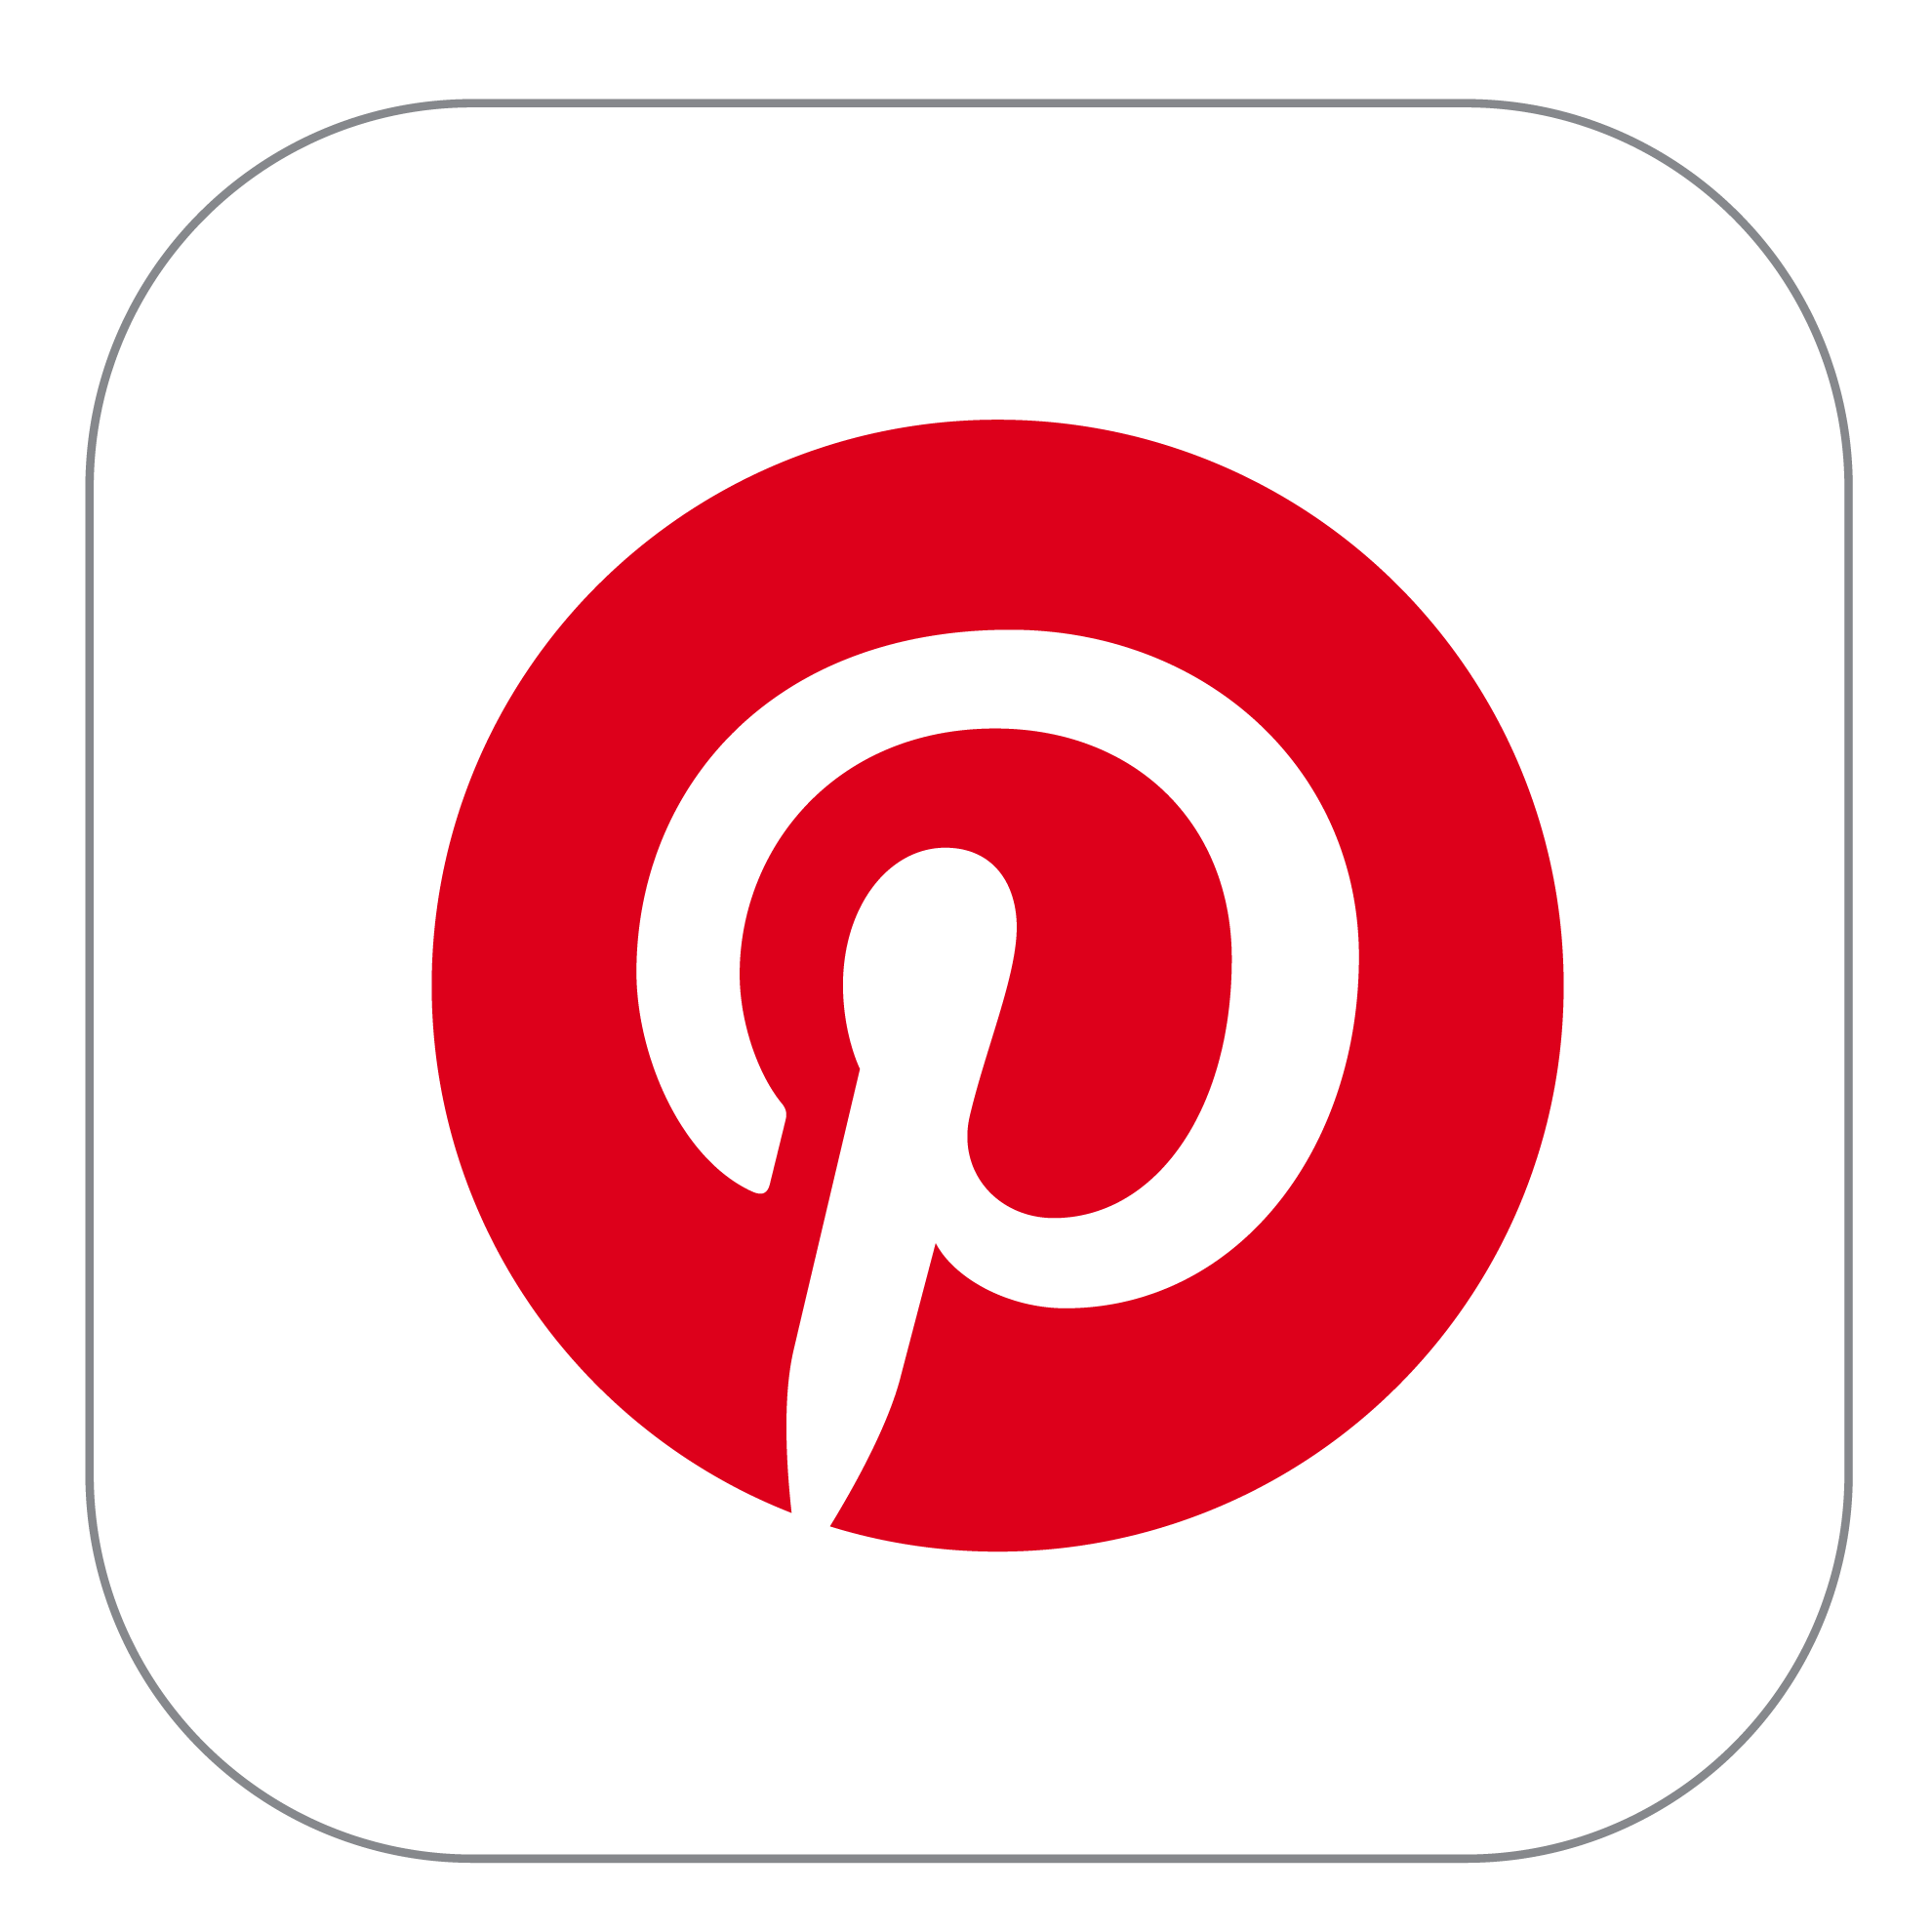 Logotipo Pinterest con tu recarga telefónica Movistar prepago ilimitado